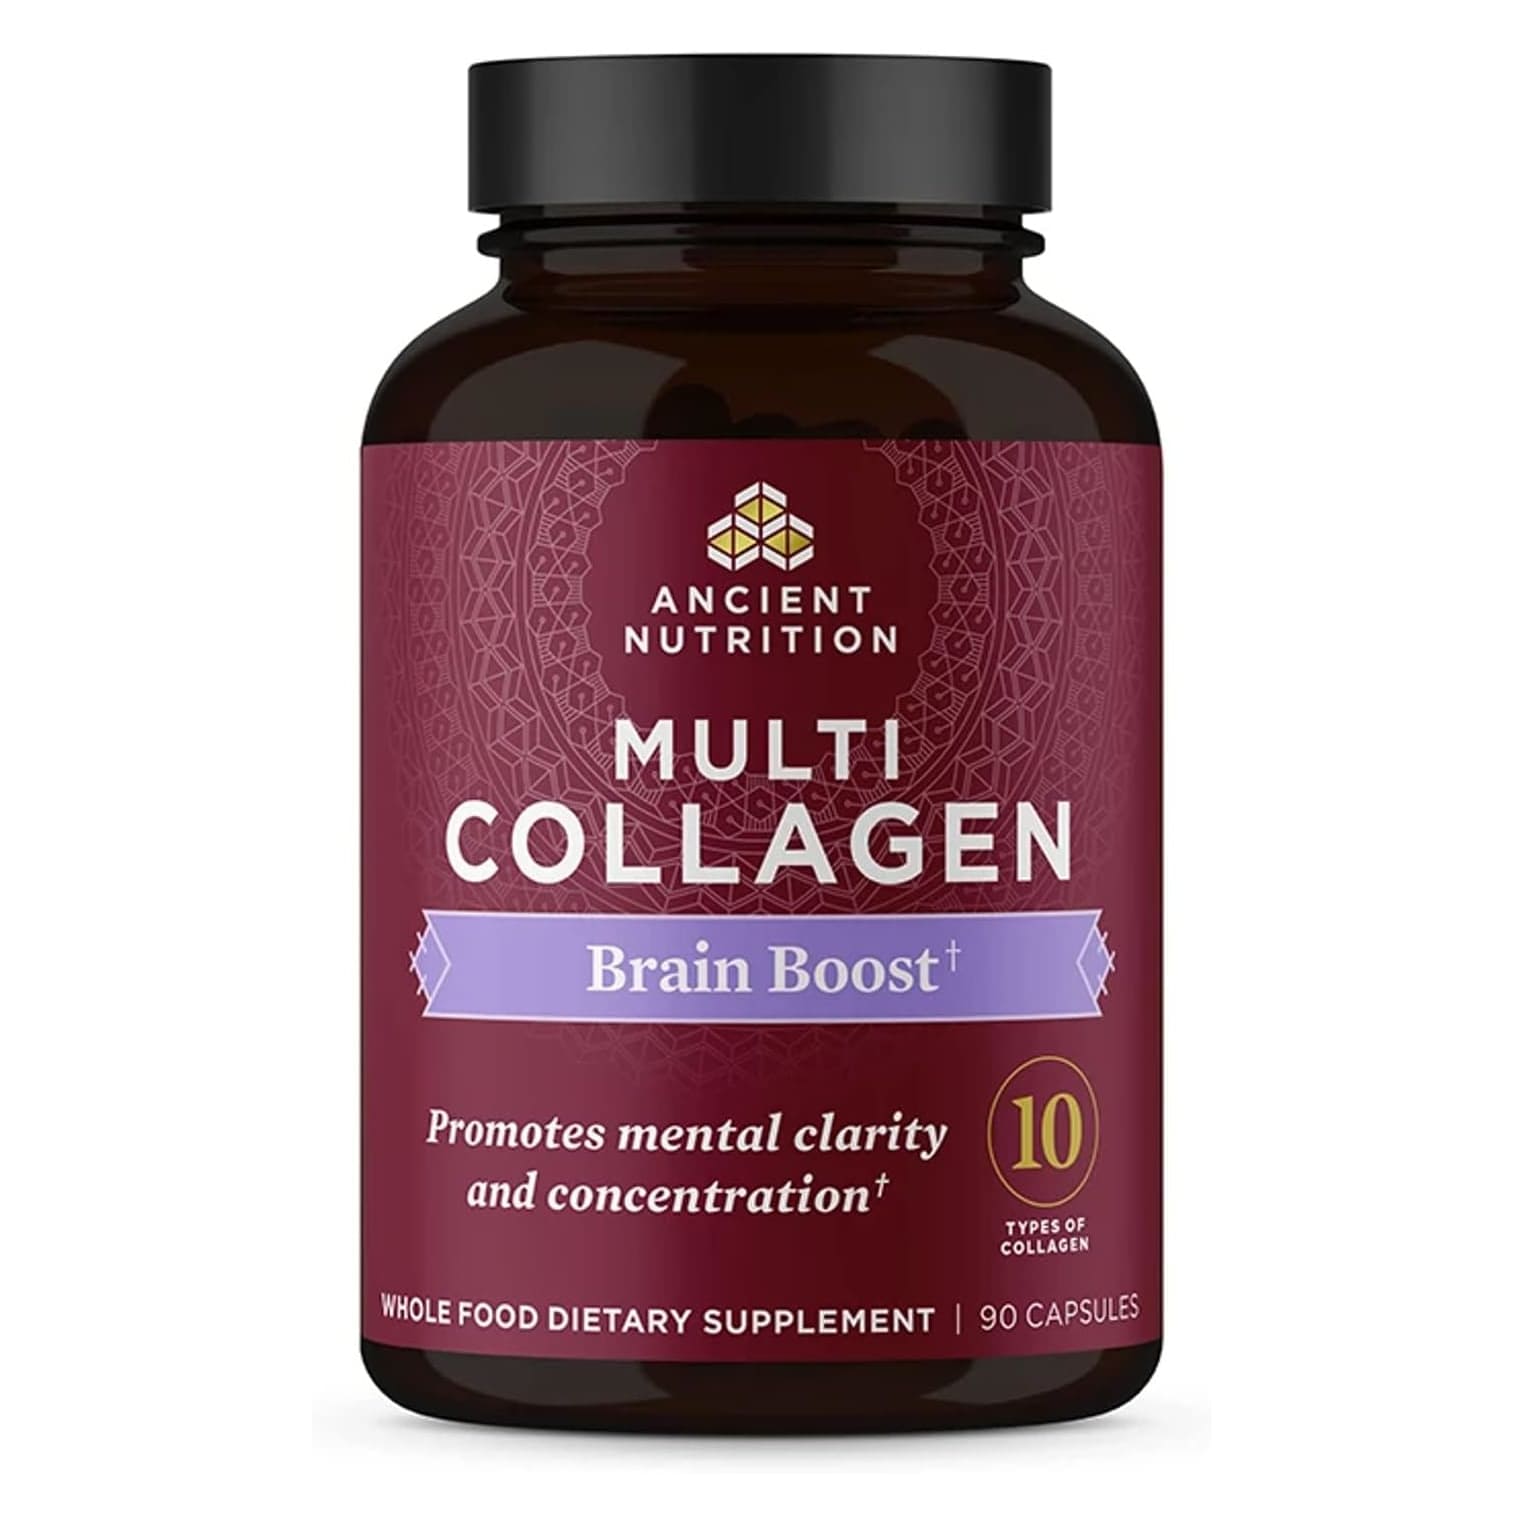 цена Коллаген Ancient Nutrition Multi Brain Boost 10 Types, 90 капсул